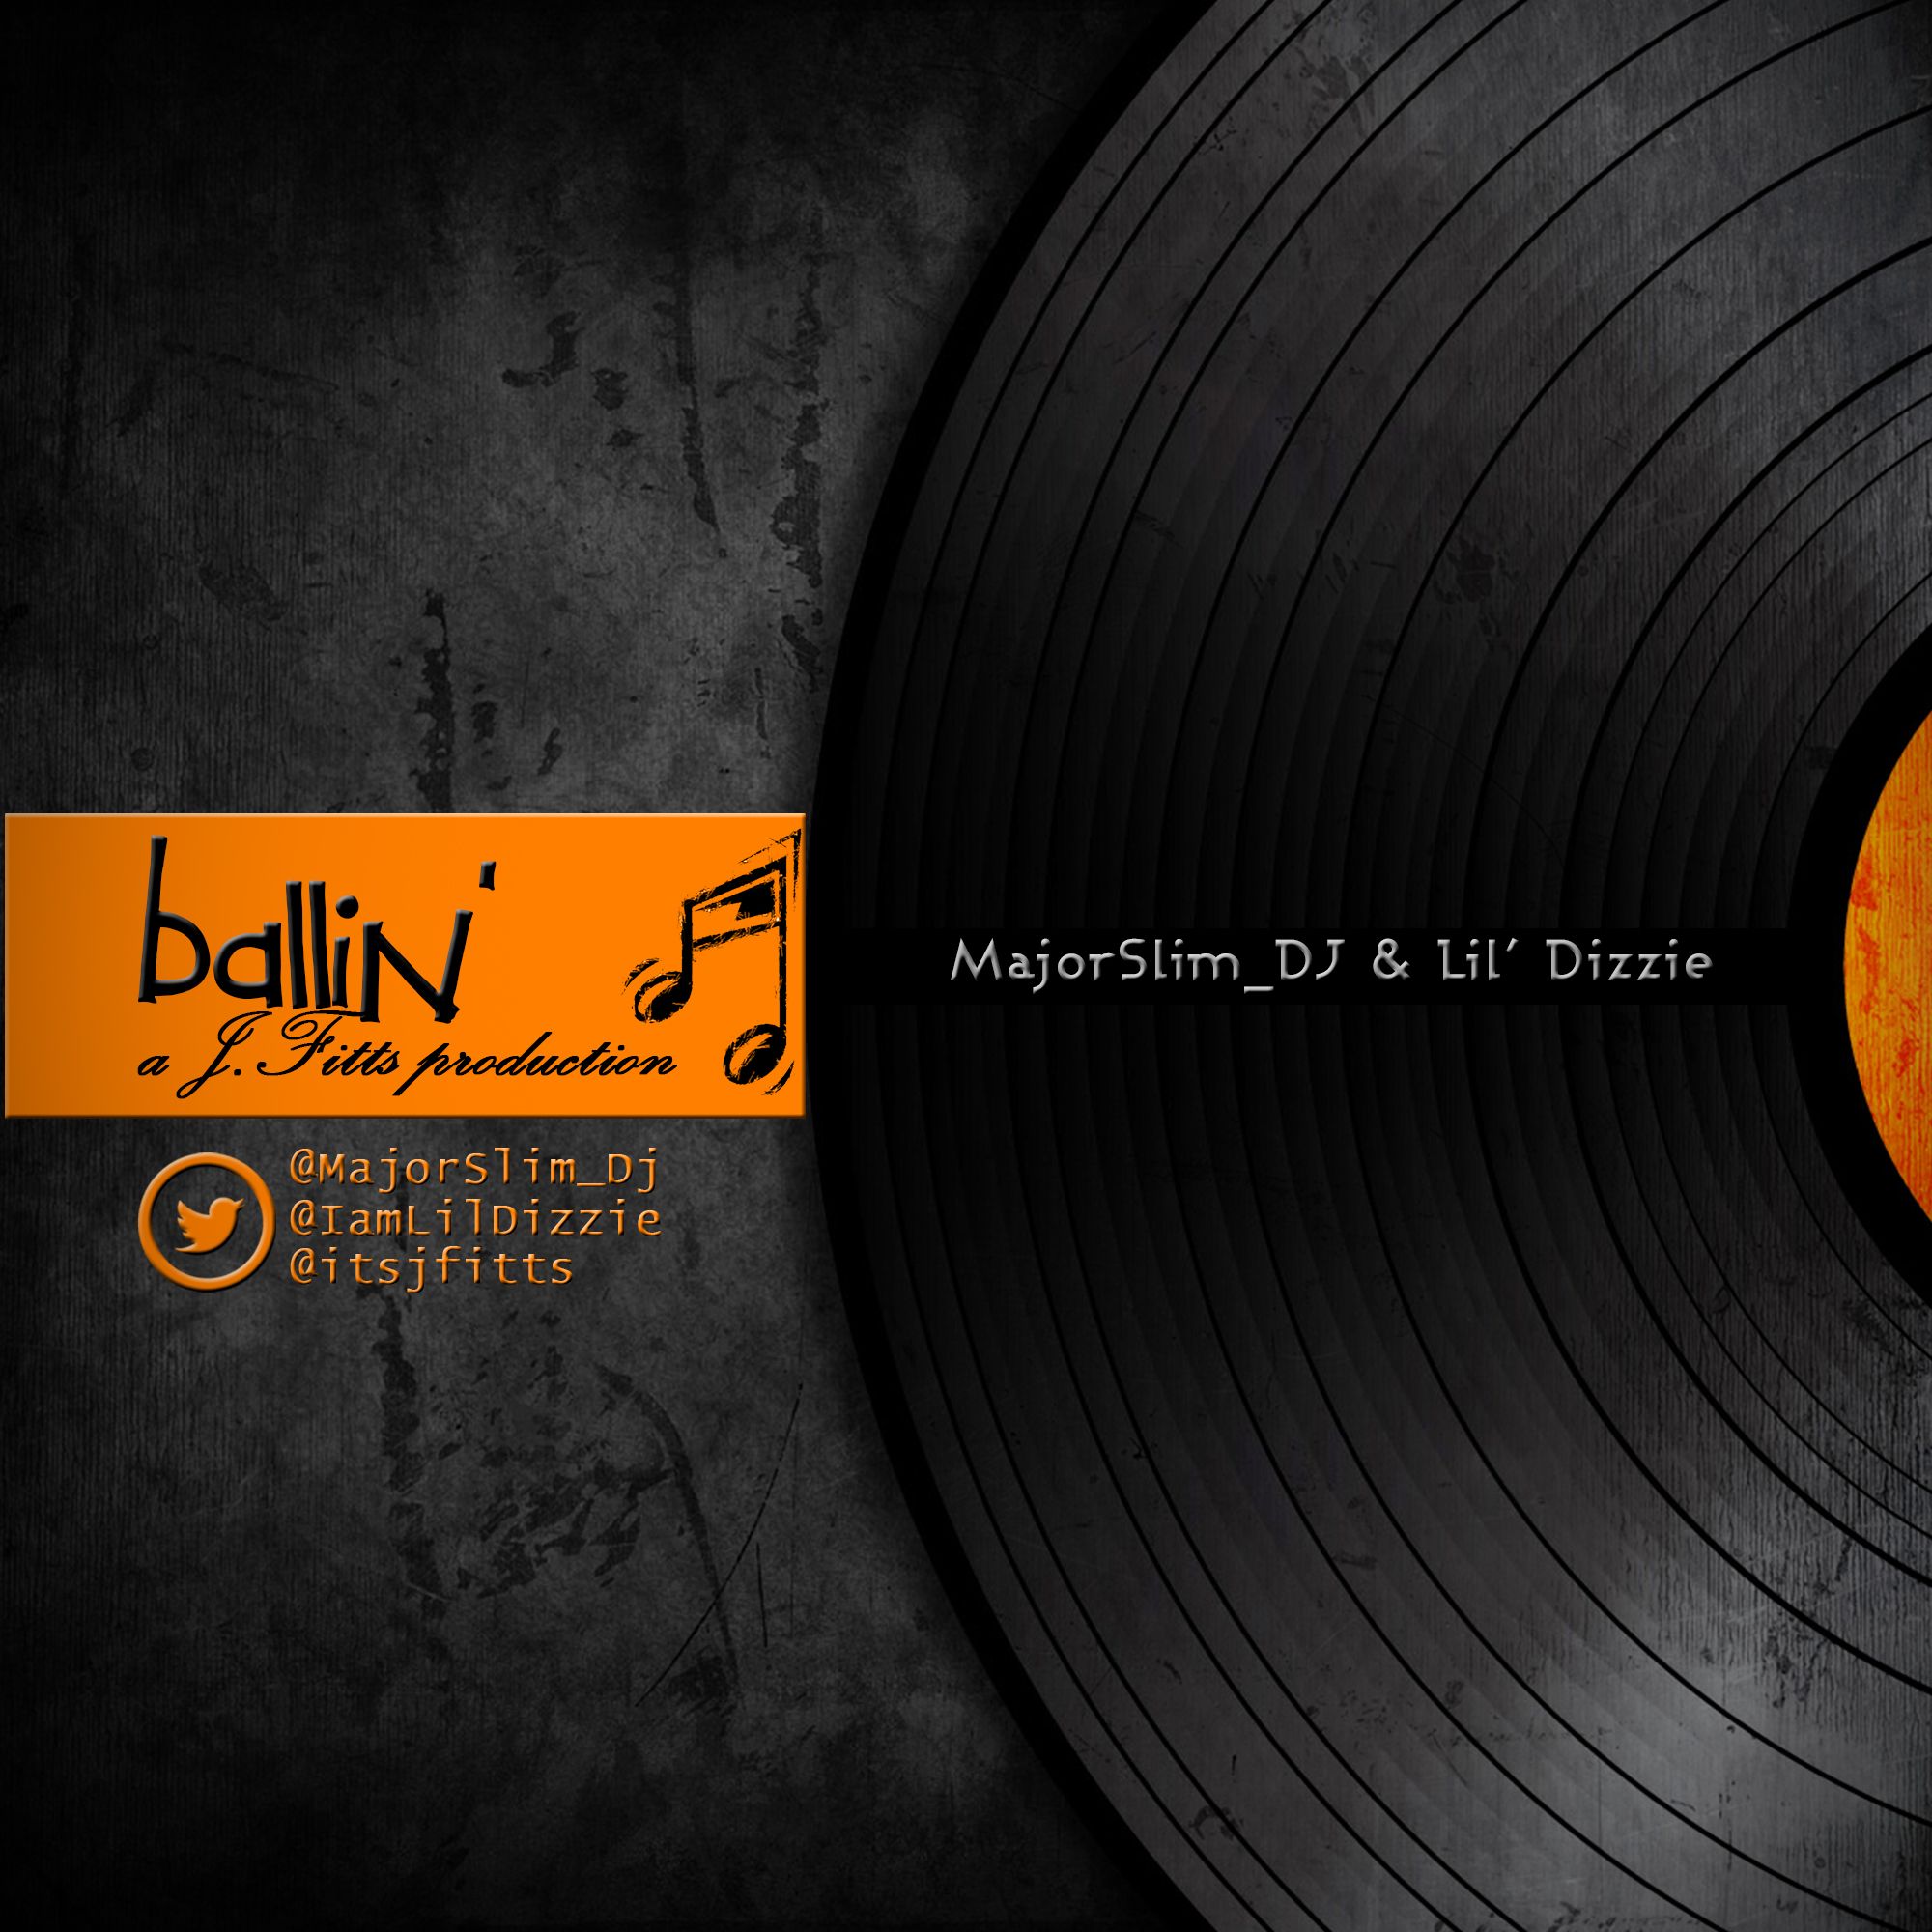 MajorSlim_DJ & Lil' Dizzie - BALLIN' (prod. by J.Fitts) Artwork | AceWorldTeam.com